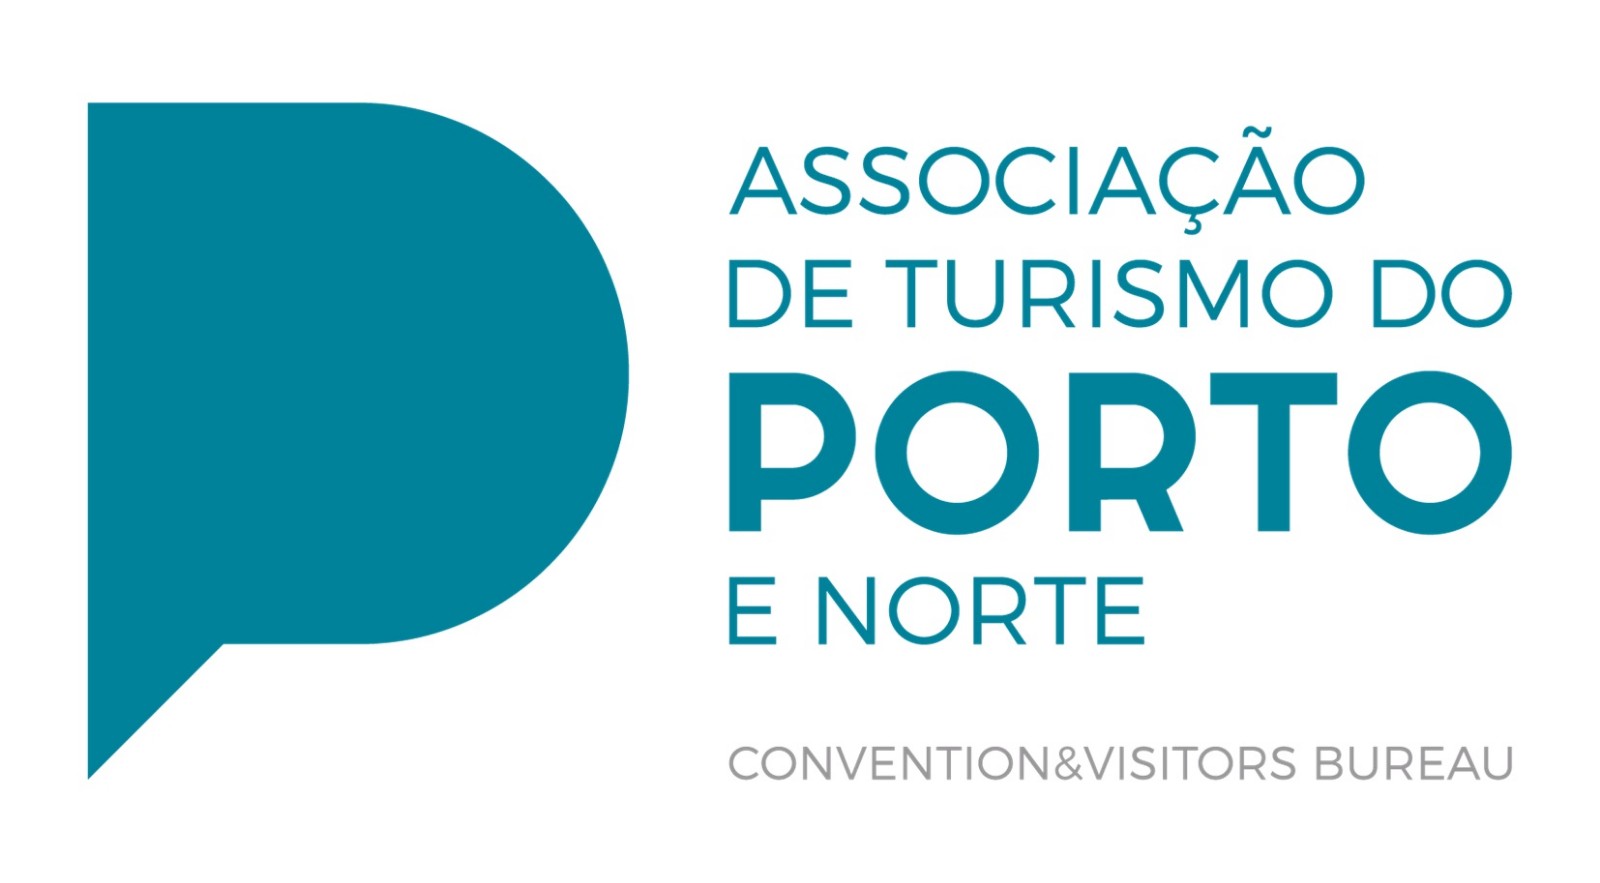 Porto and Northern Portugal Tourism Board